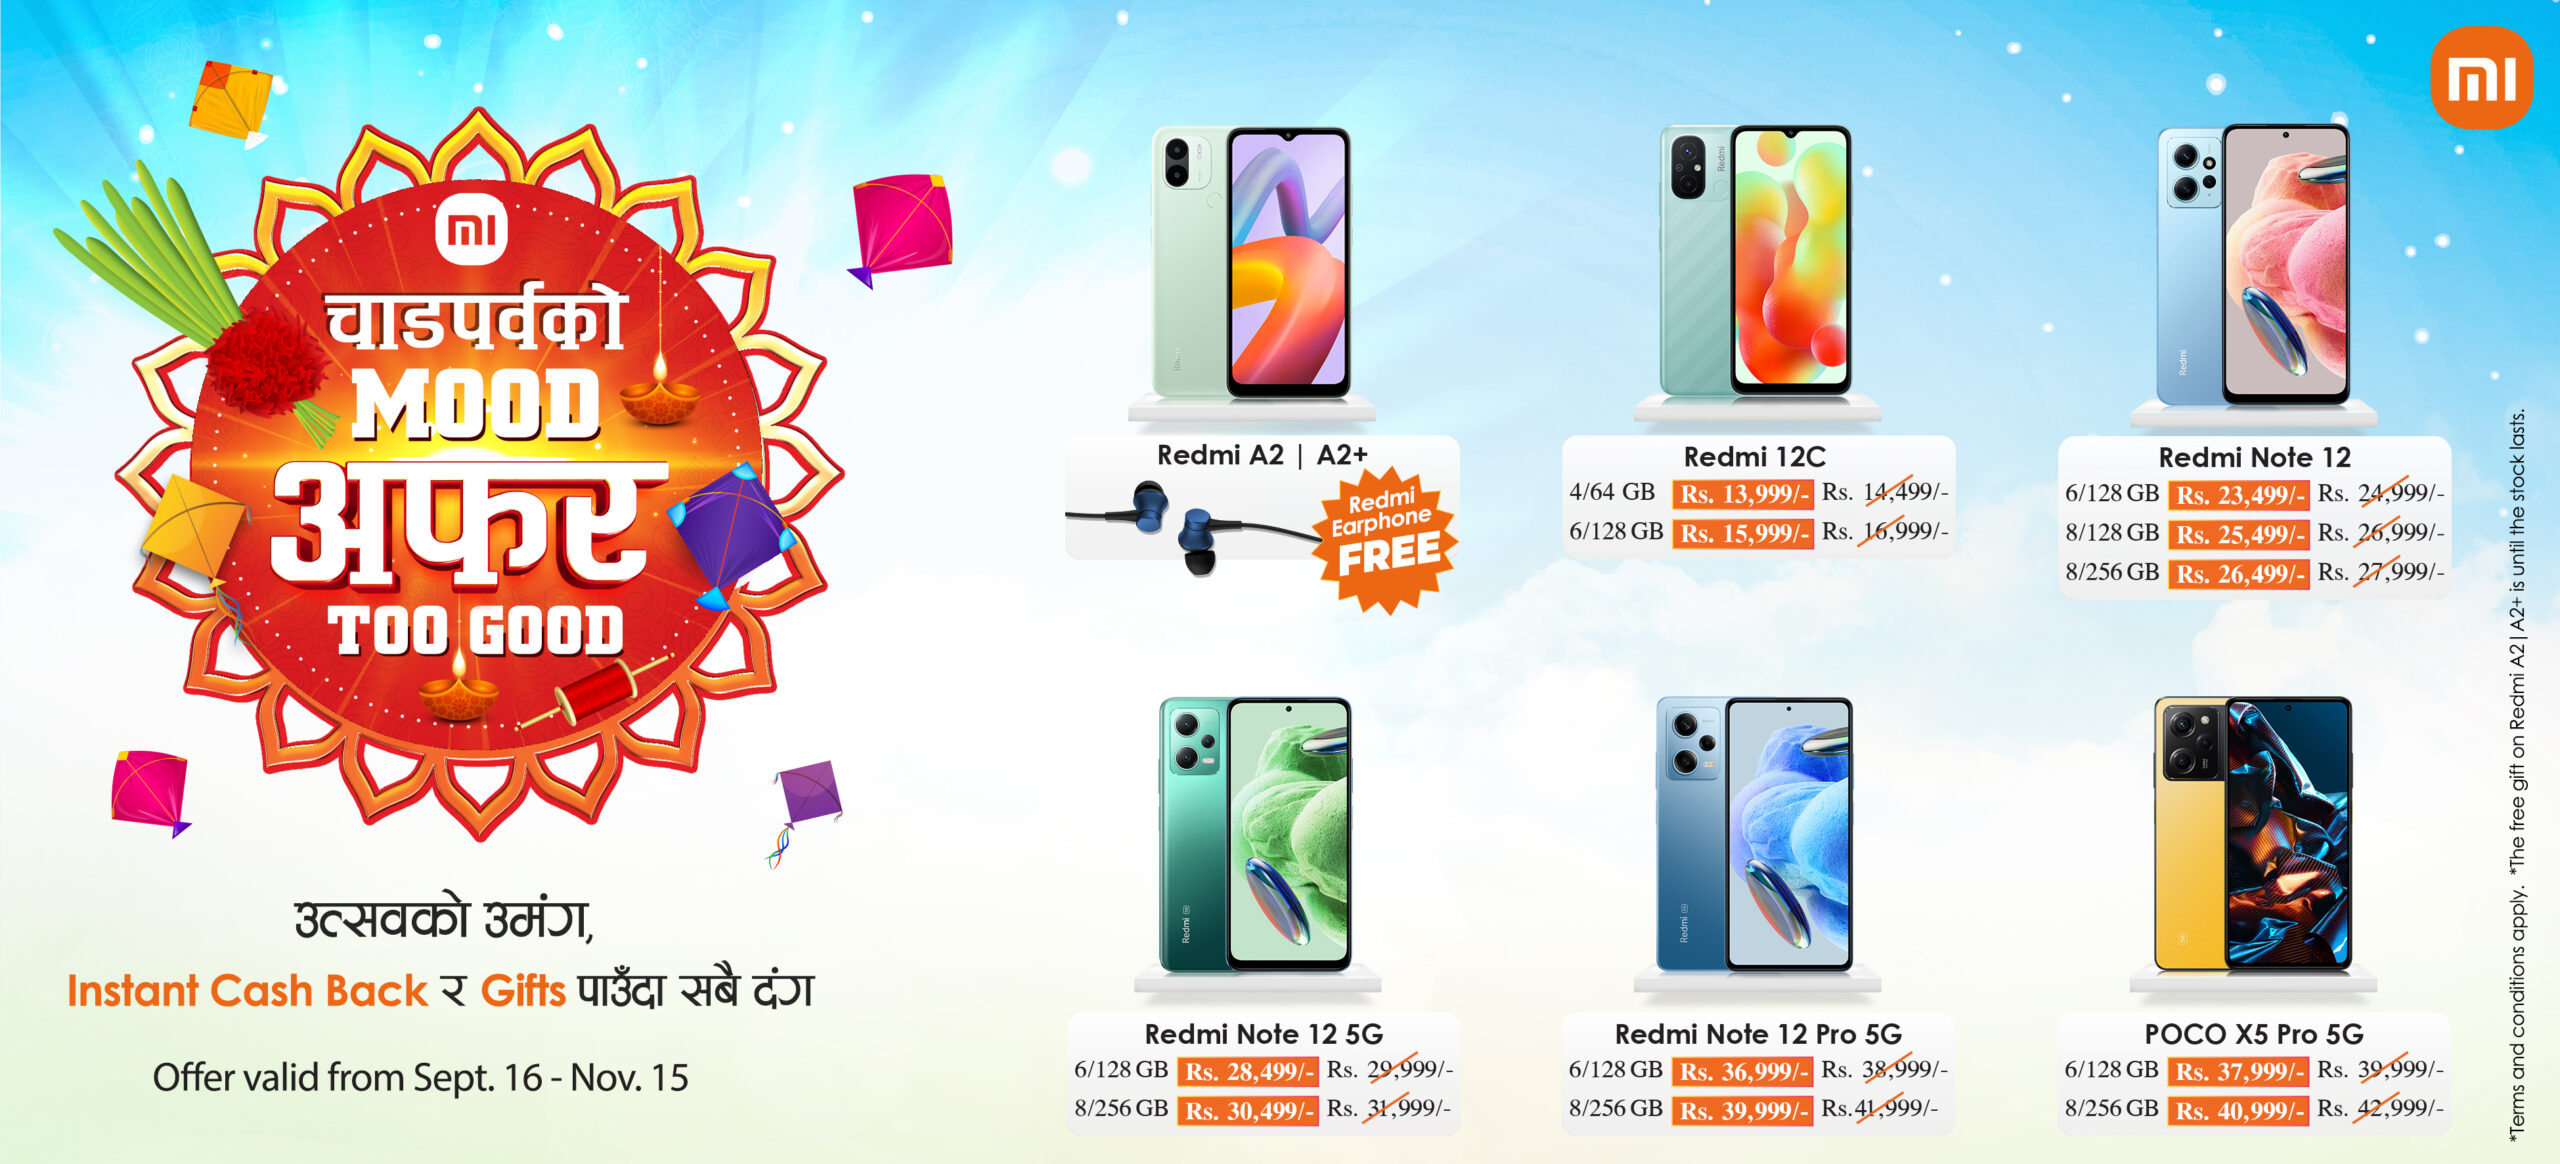 Xiaomi unveils festive offer: “Festive Mood, Offer Too Good”